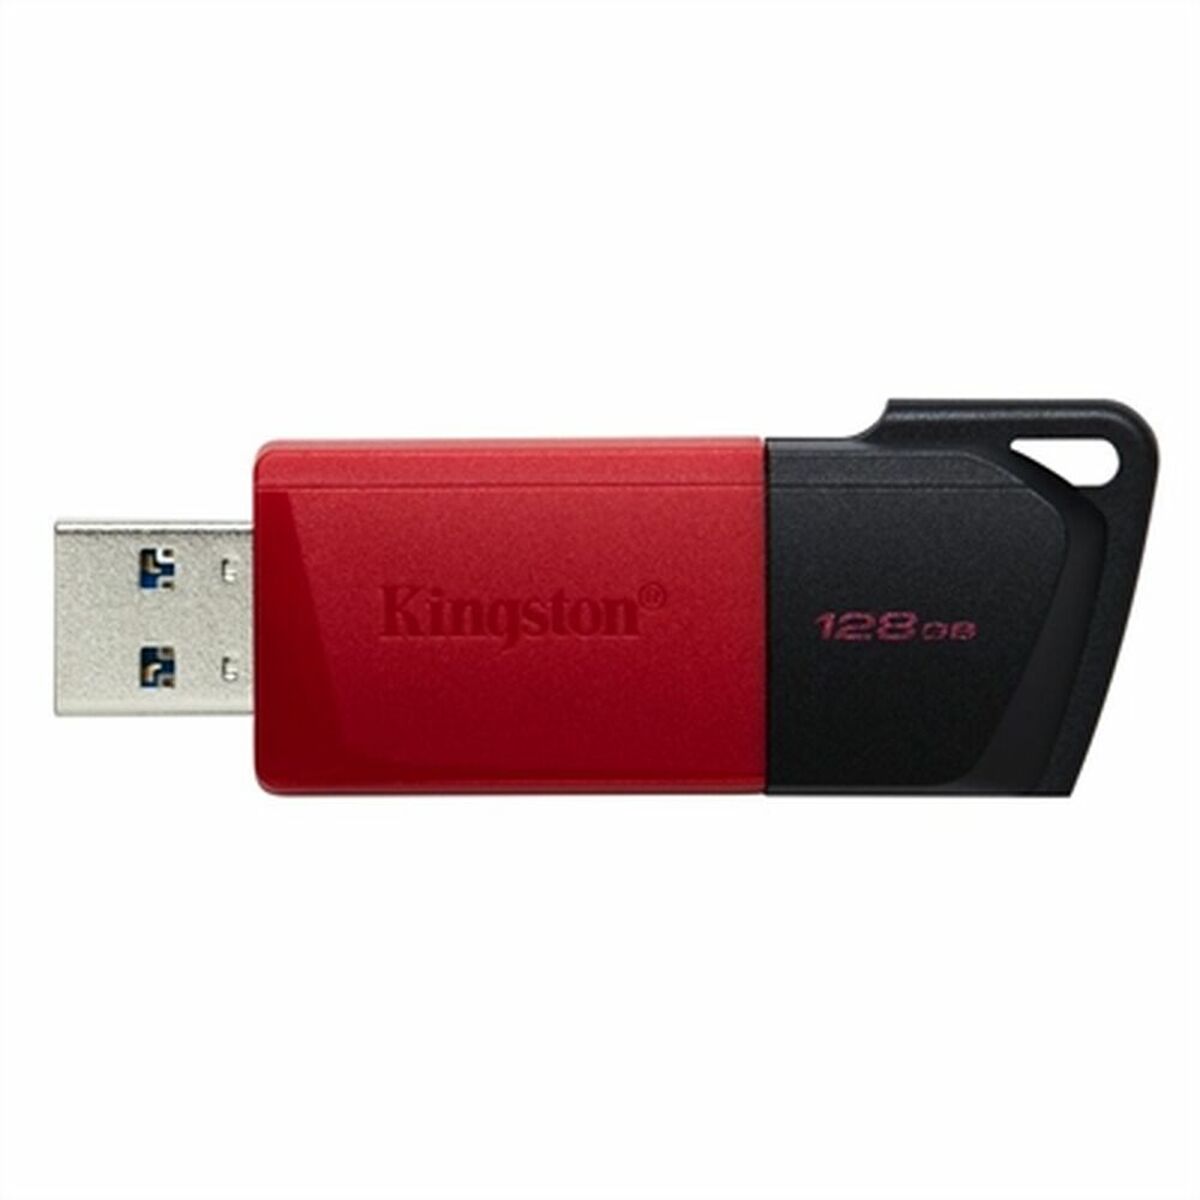 Clé USB Kingston DTXM 128 GB 128 GB